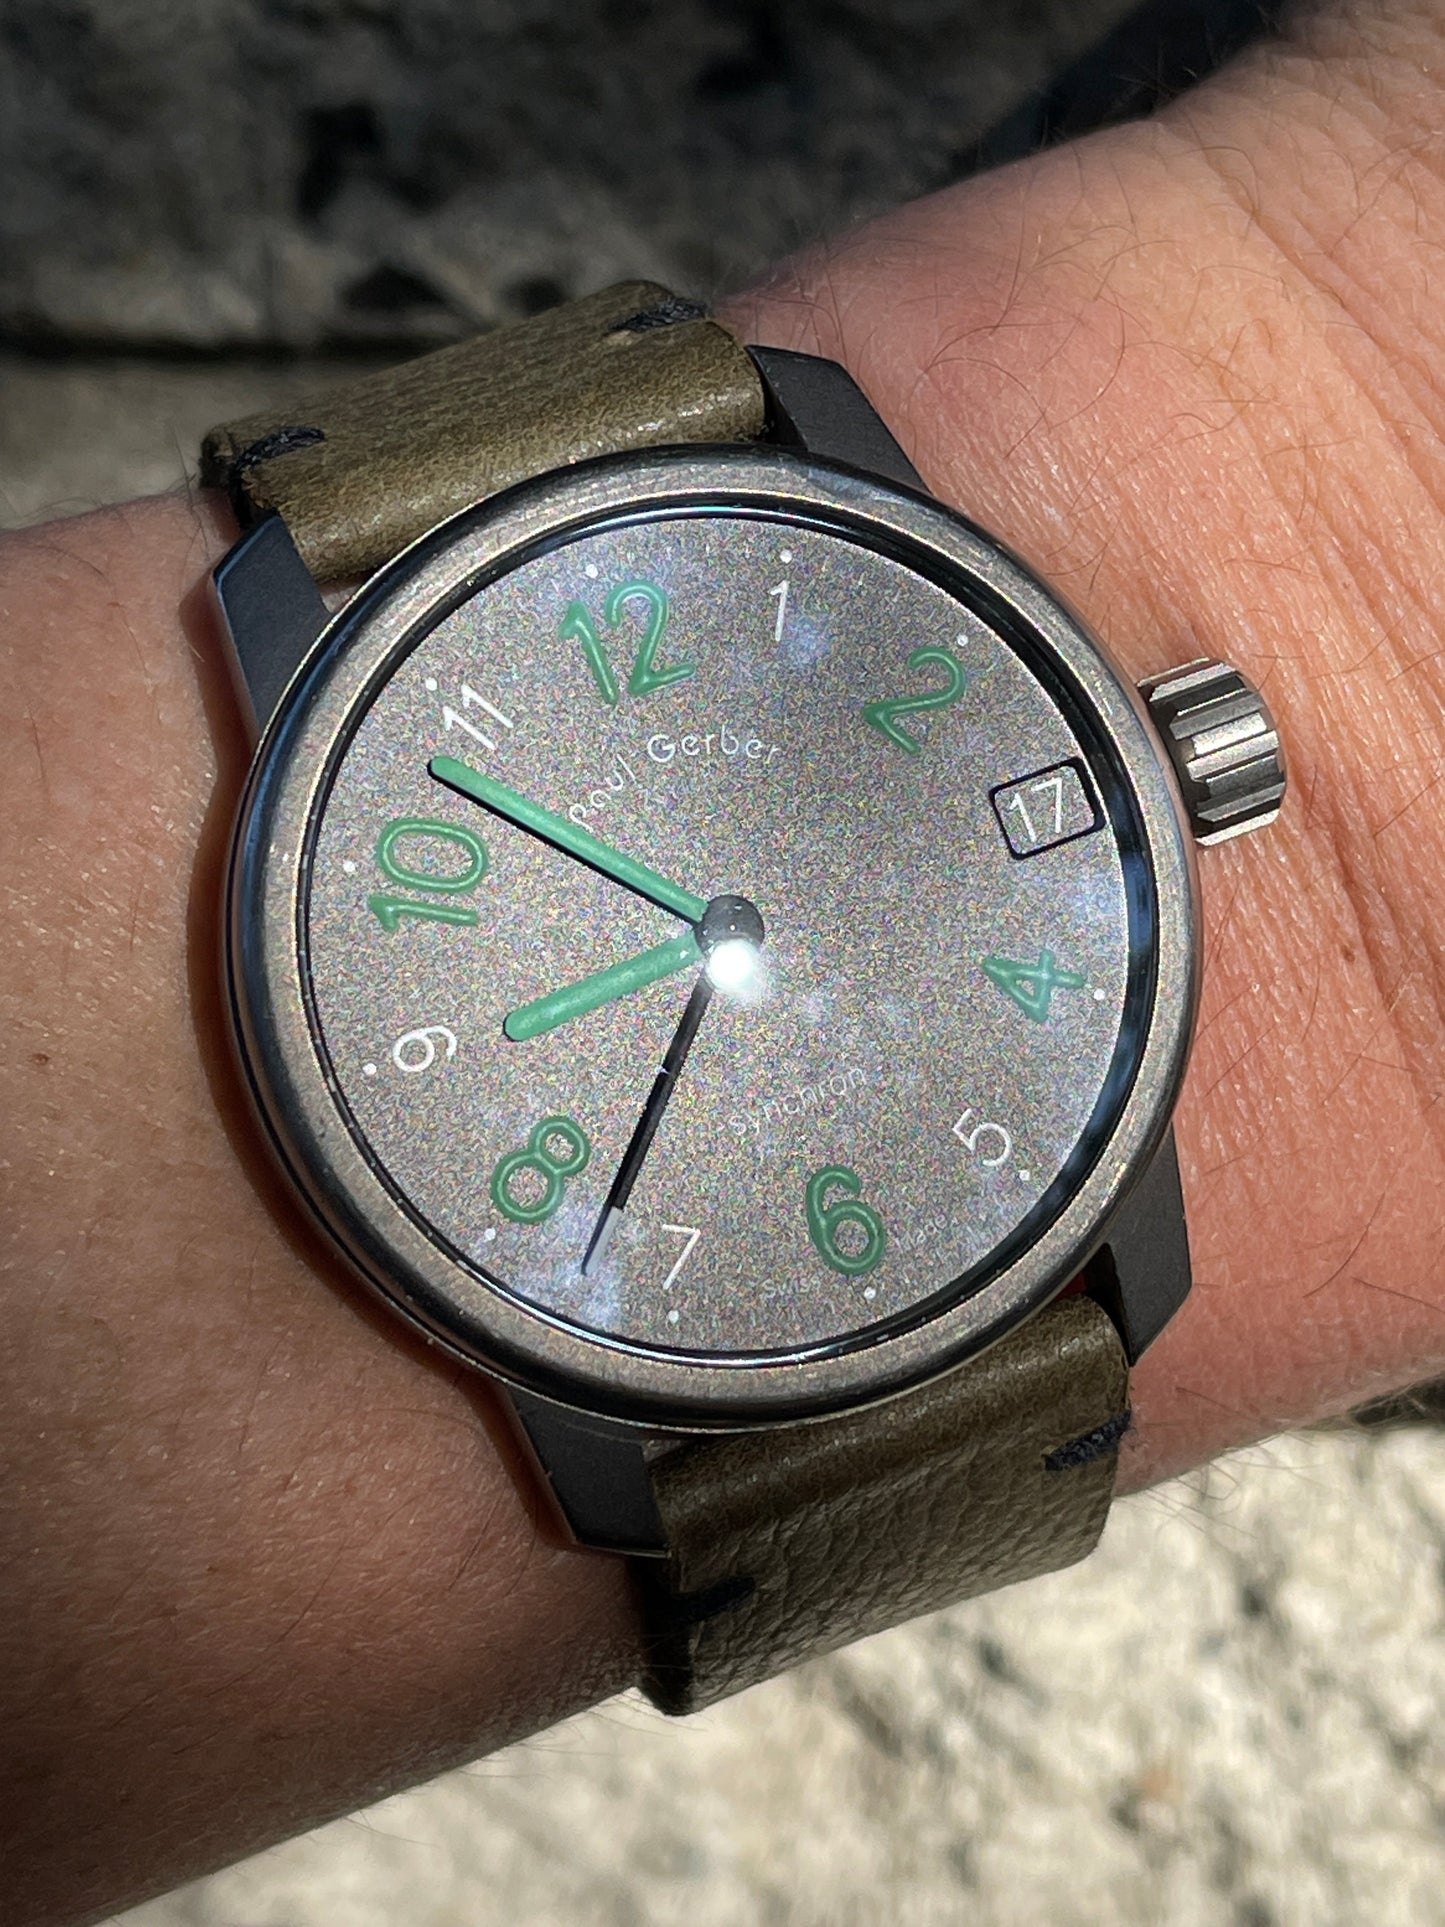 Paul Gerber Model 42 Synchron Watch (Estate)